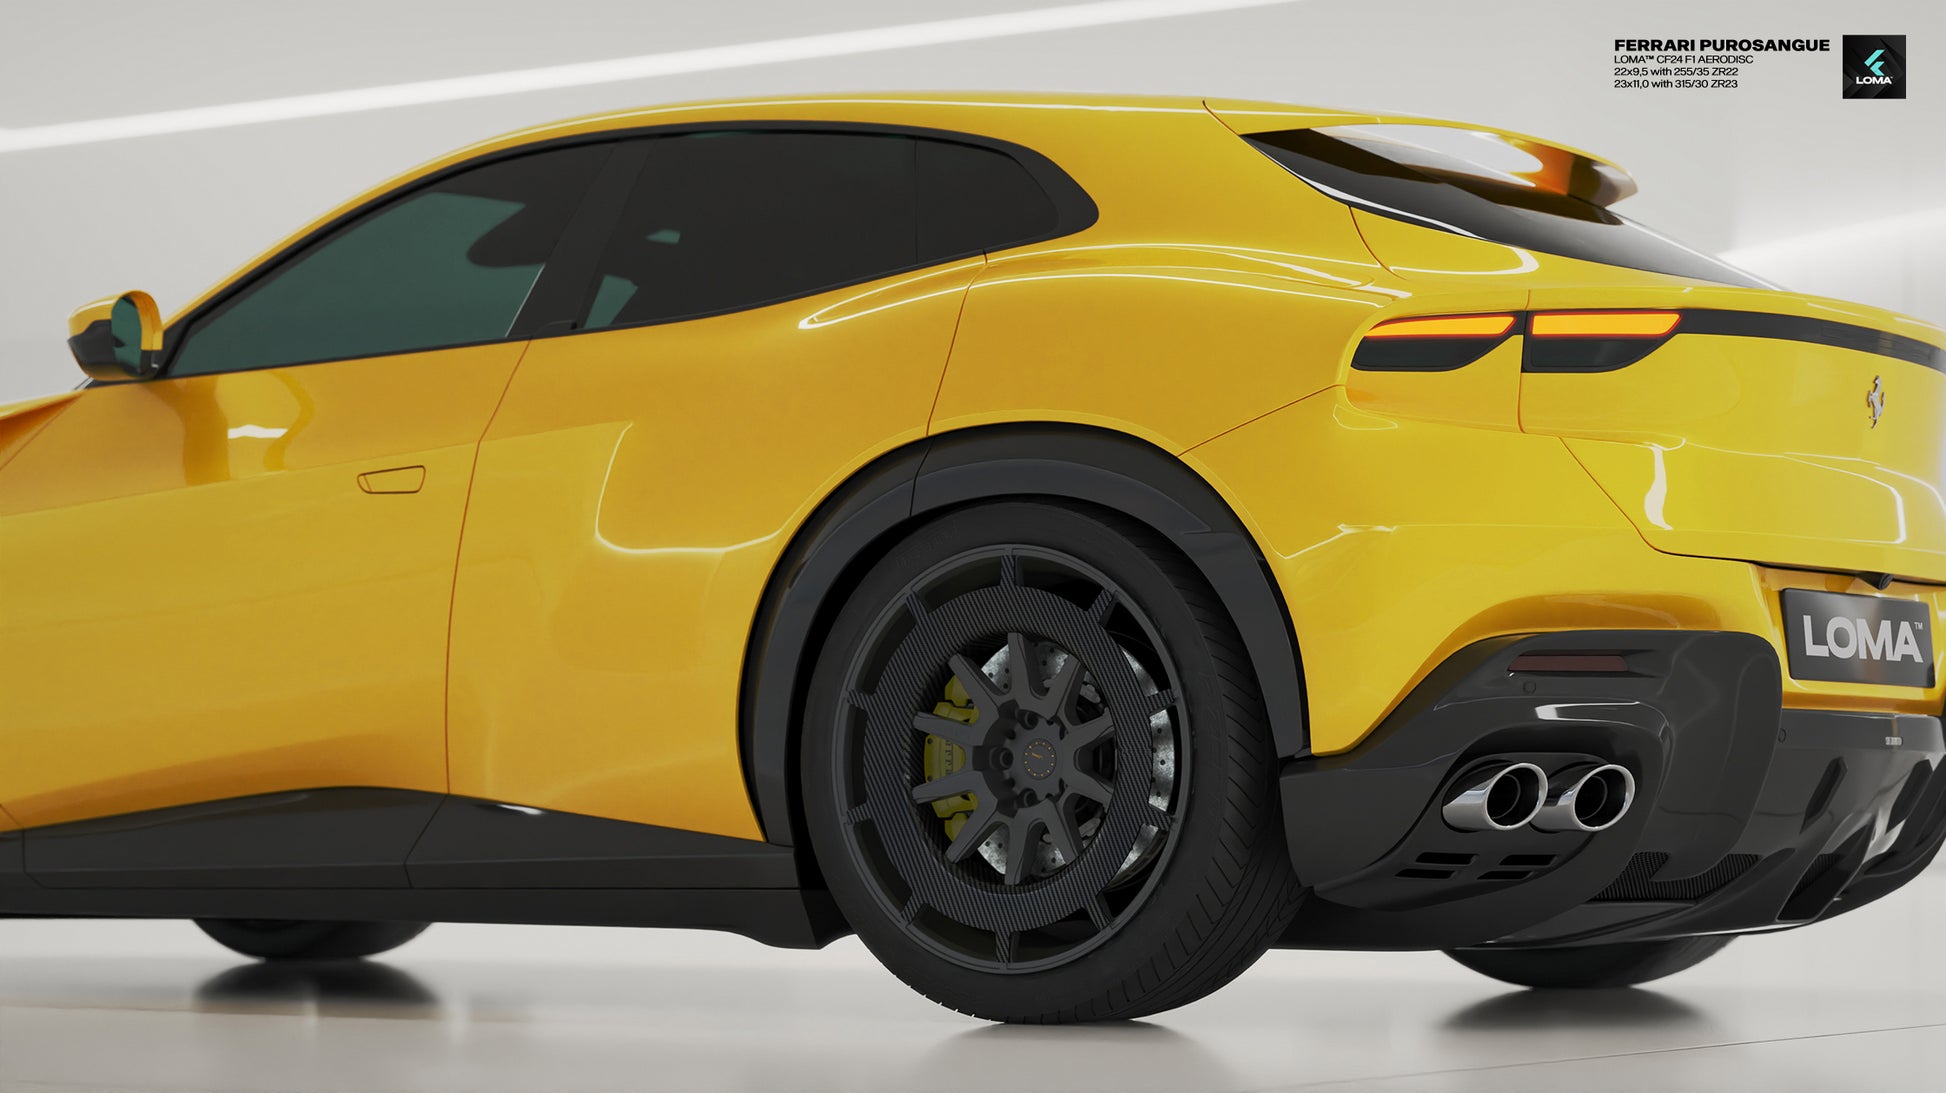 Custom wheels for Ferrari Purosangue in widebody configuration